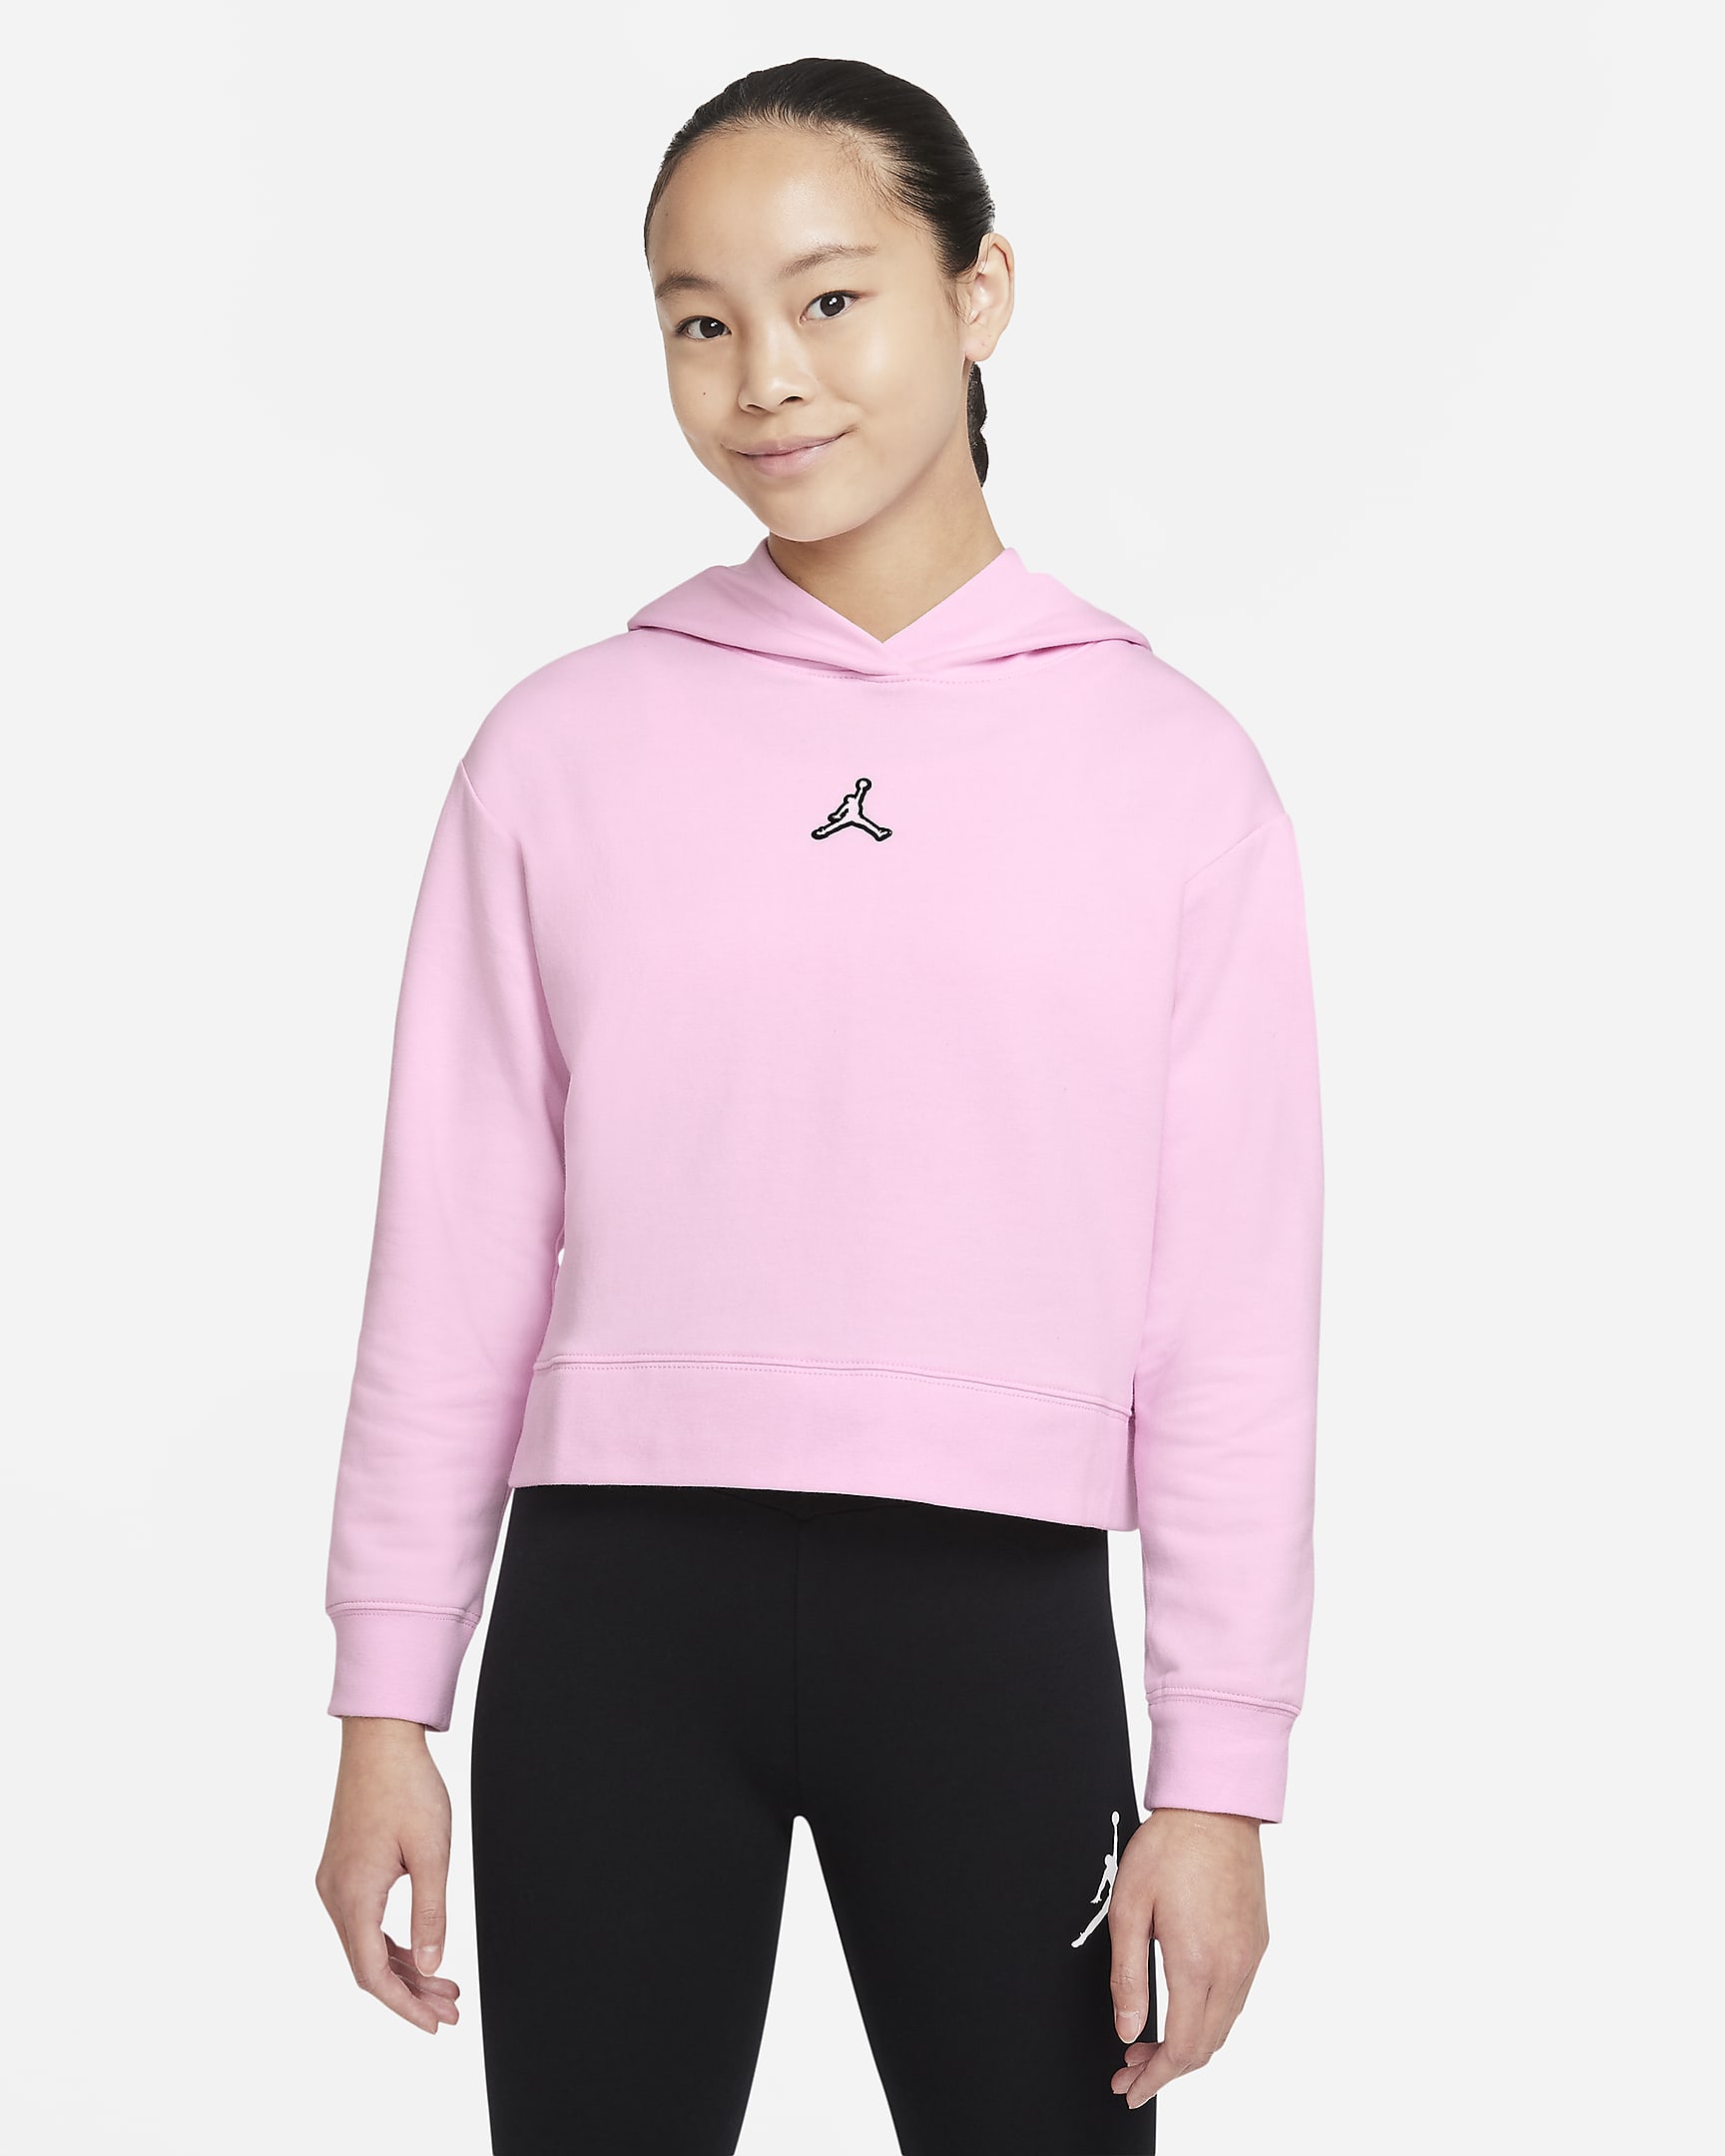 Air Jordan 1 High Bubble Gum Atmosphere Shirts and Clothing